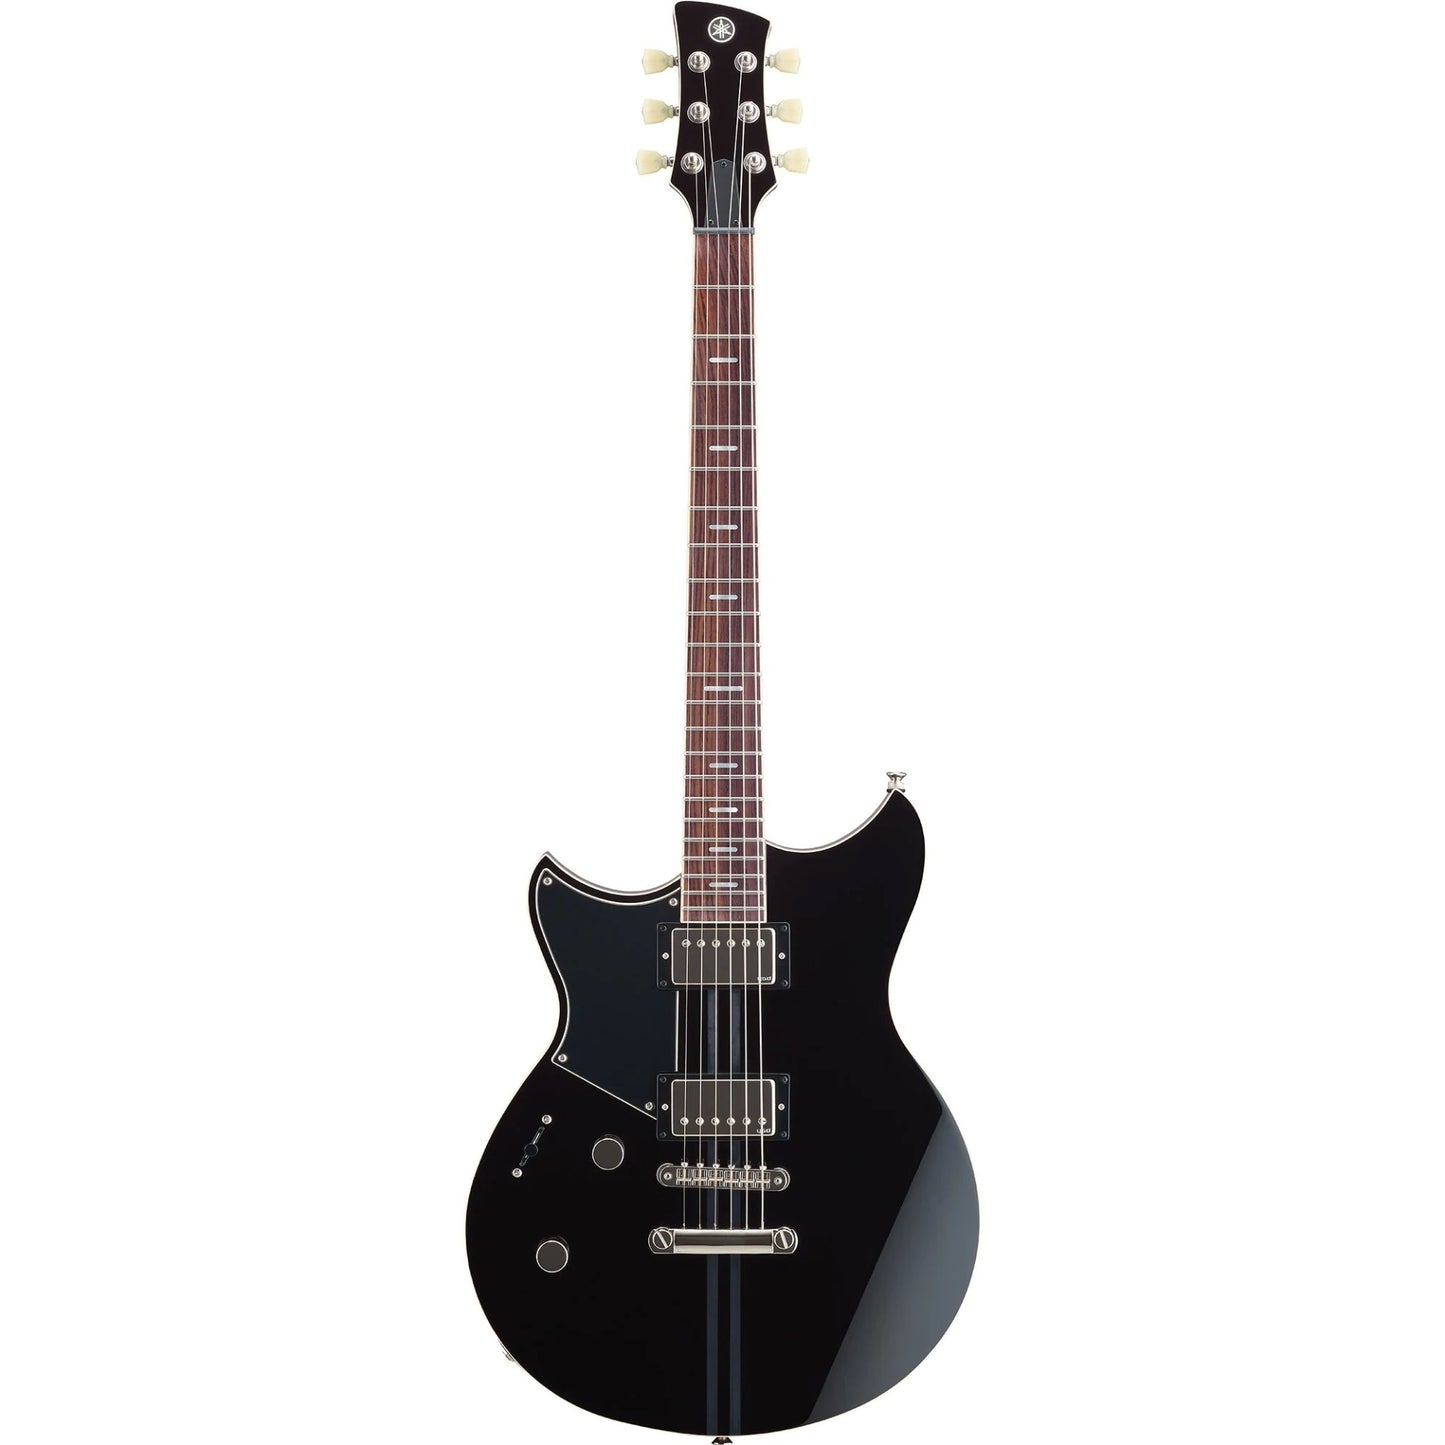 Yamaha Revstar RSS20LBL Left Handed Electric Guitar in Black